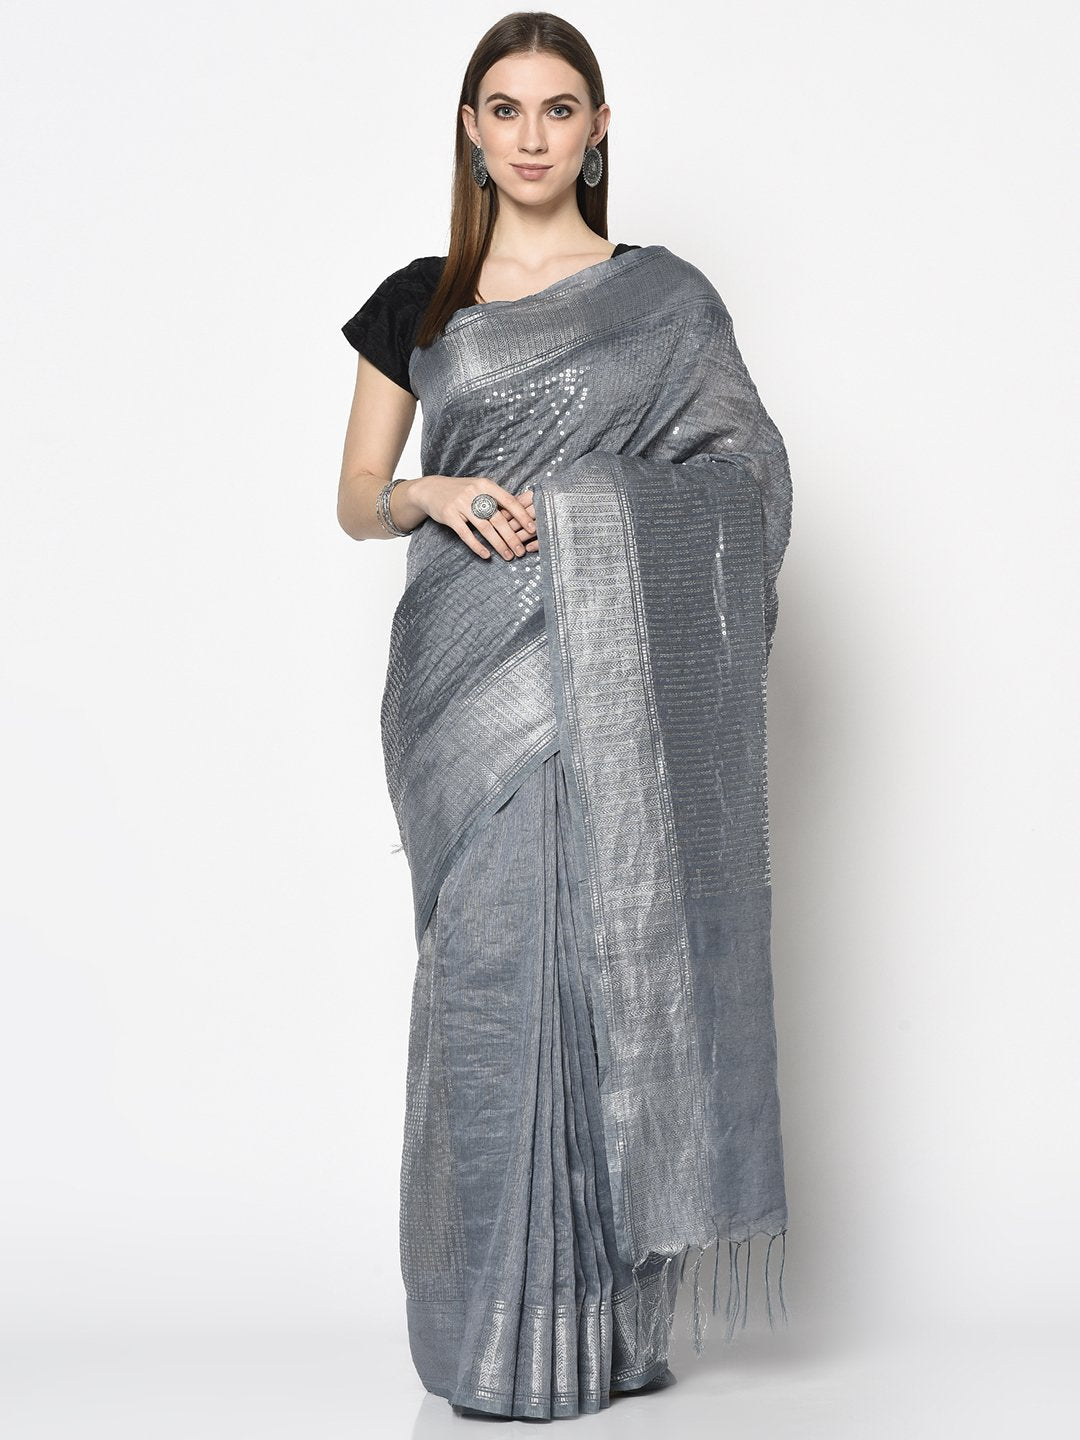 Shop Grey Color Handloom Saree For Party which is Saree online at simaaya At